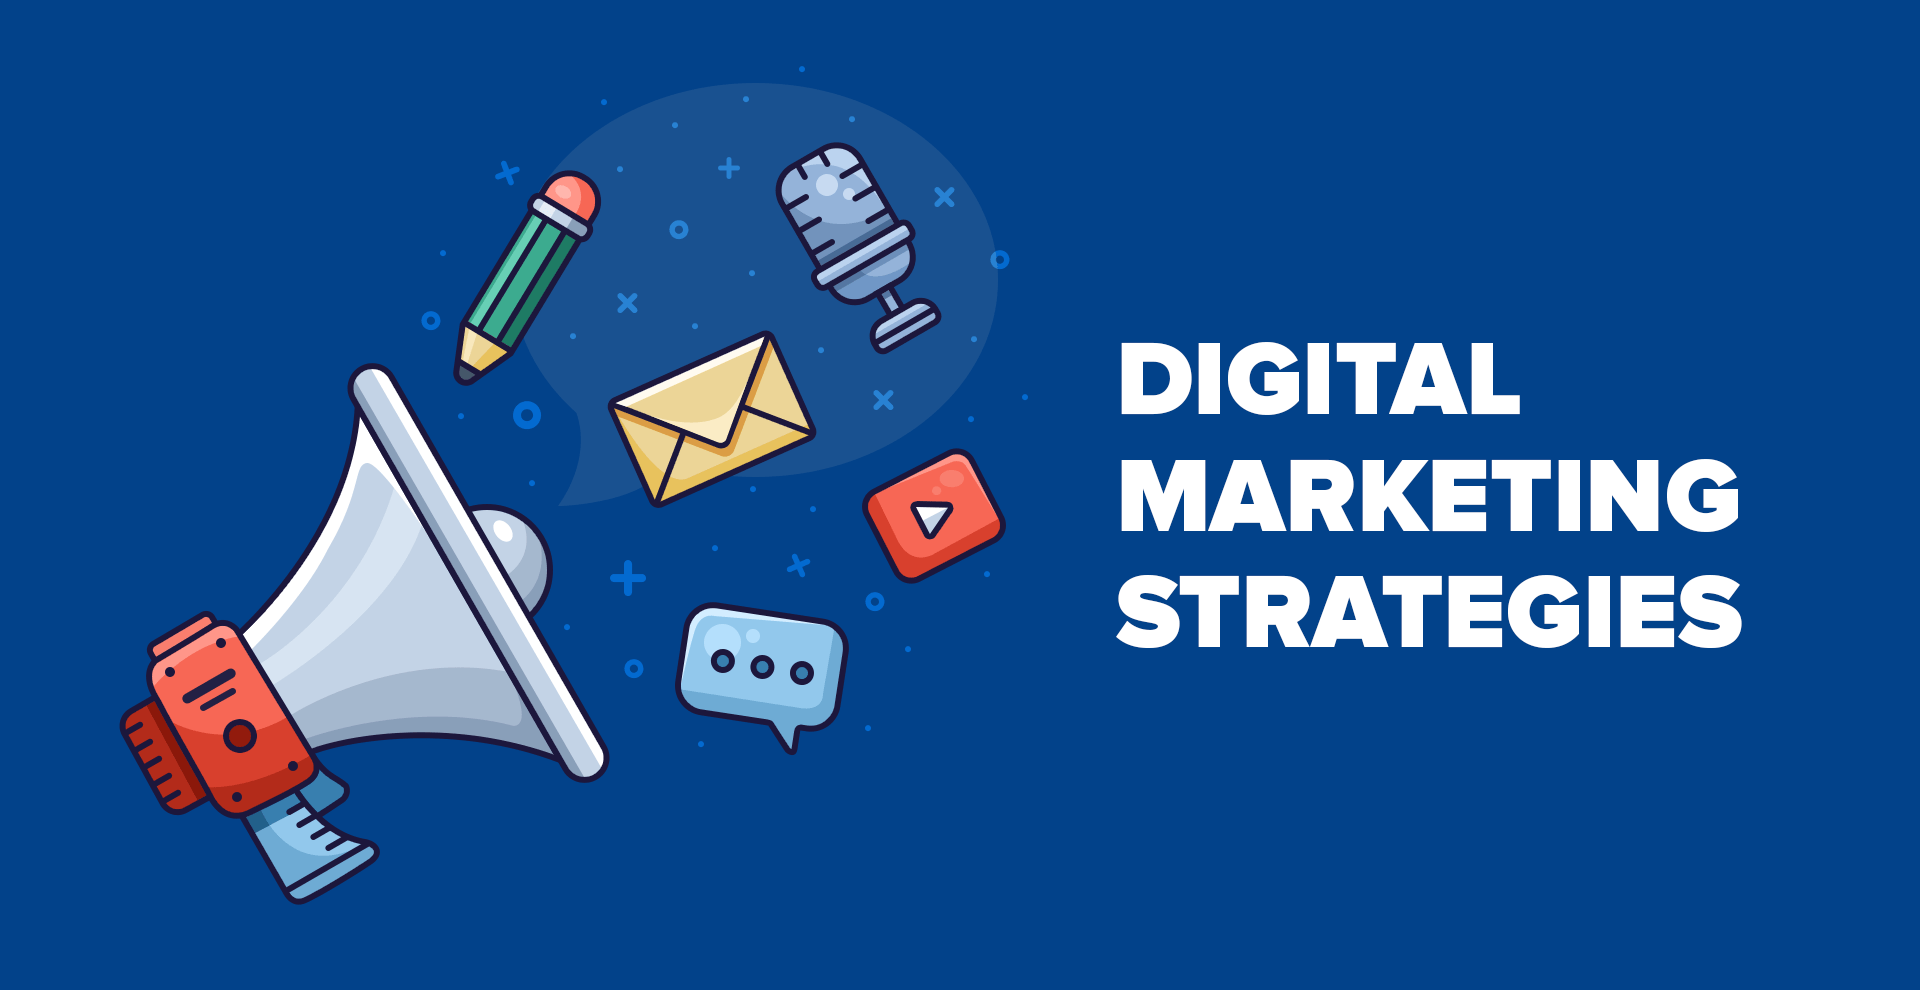 7 Digital Marketing Strategies That Actually Work